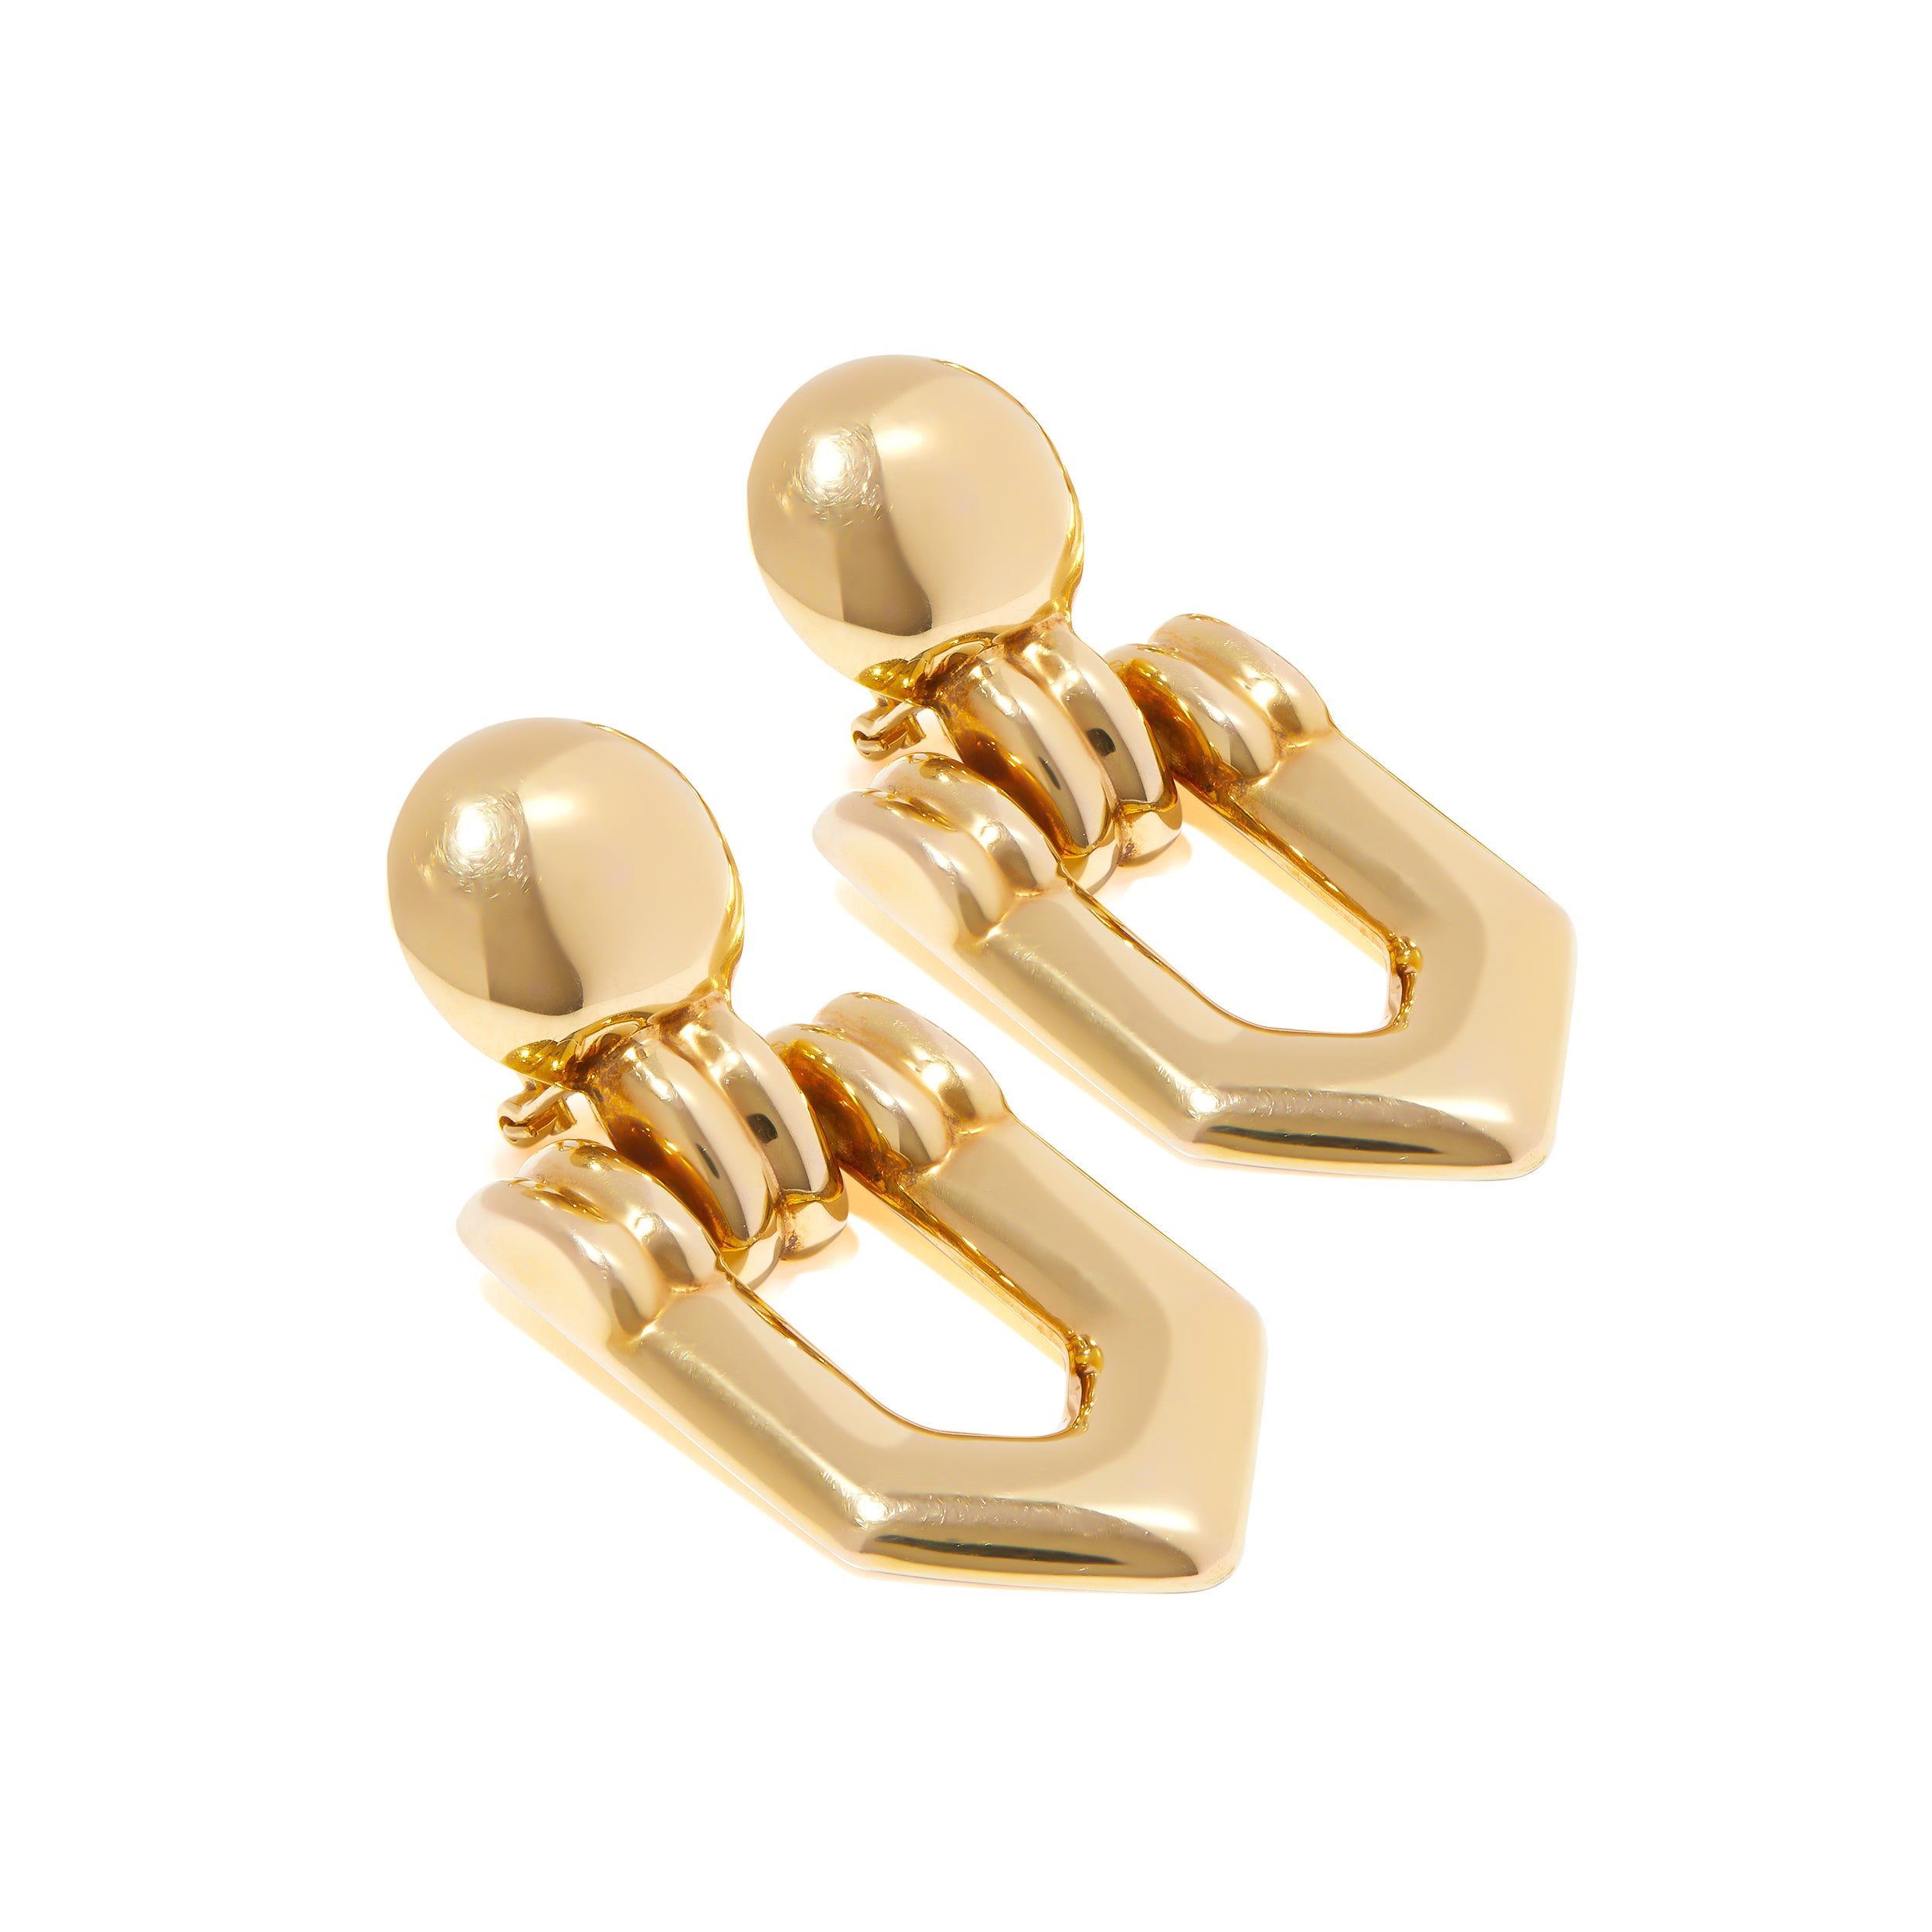 Italian 1980s-1990s 14ct gold dangle earrings in hinged door knocker design.